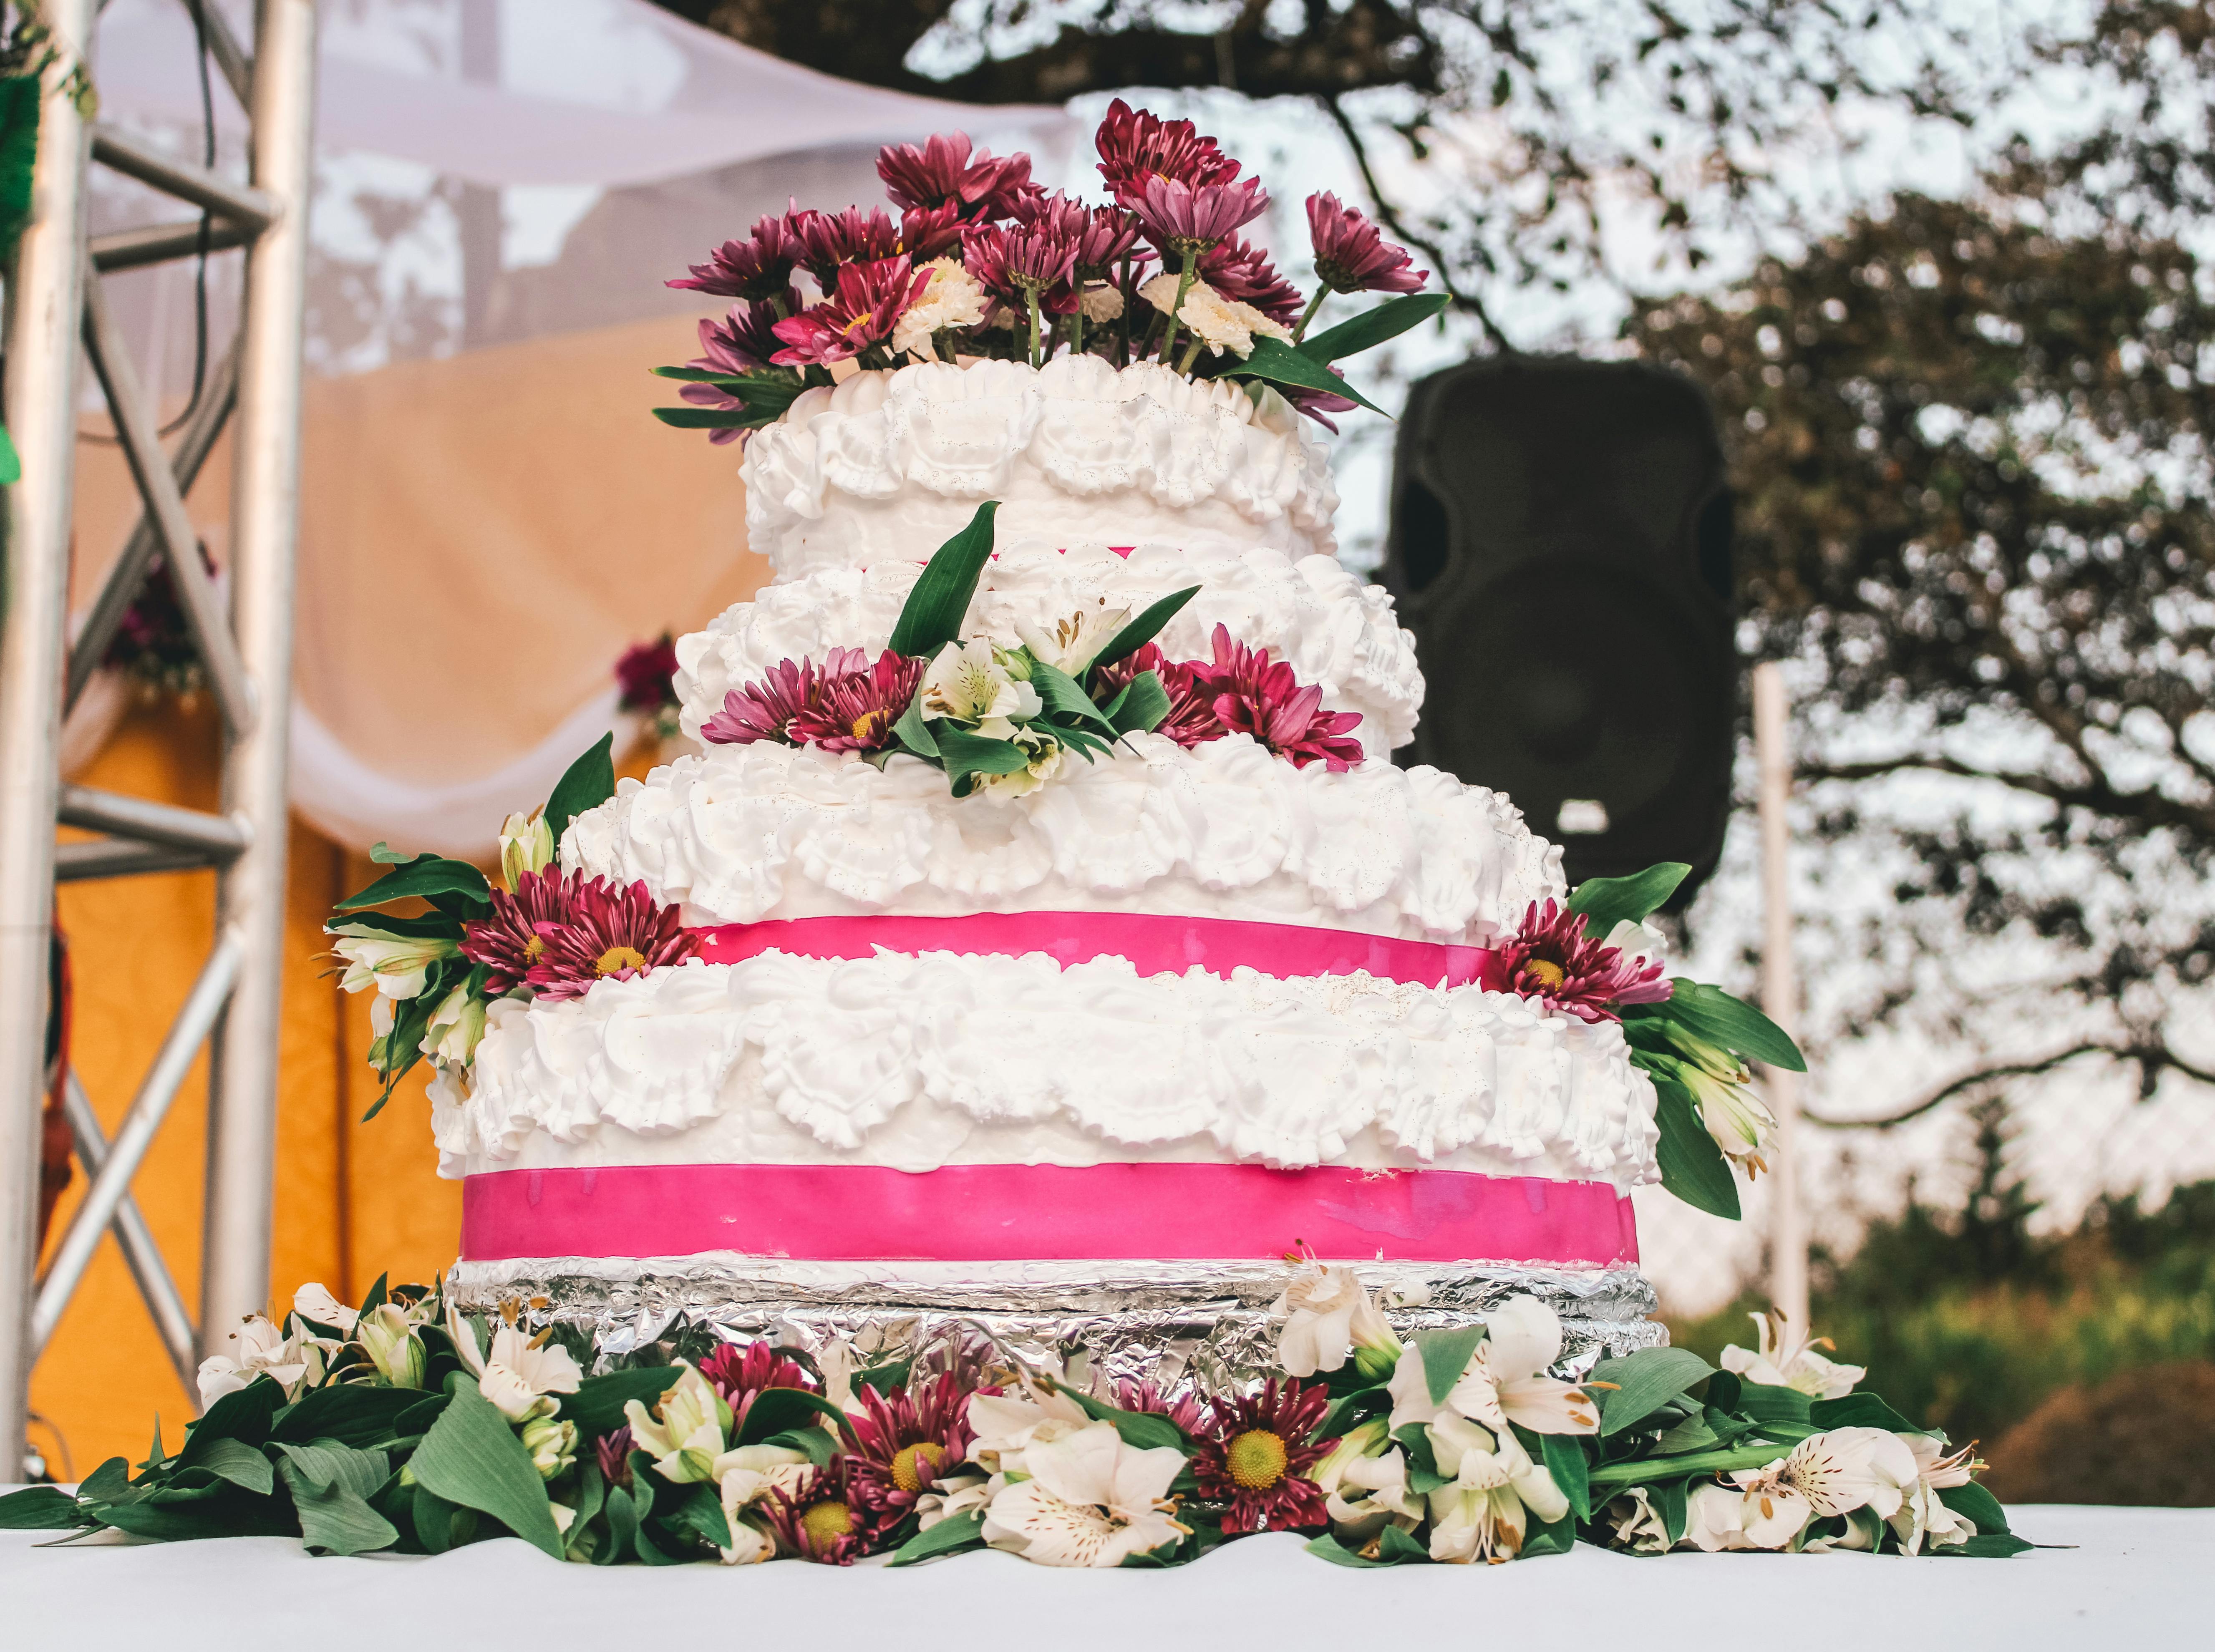 Free stock photo of #love #cake #marriage #wedding